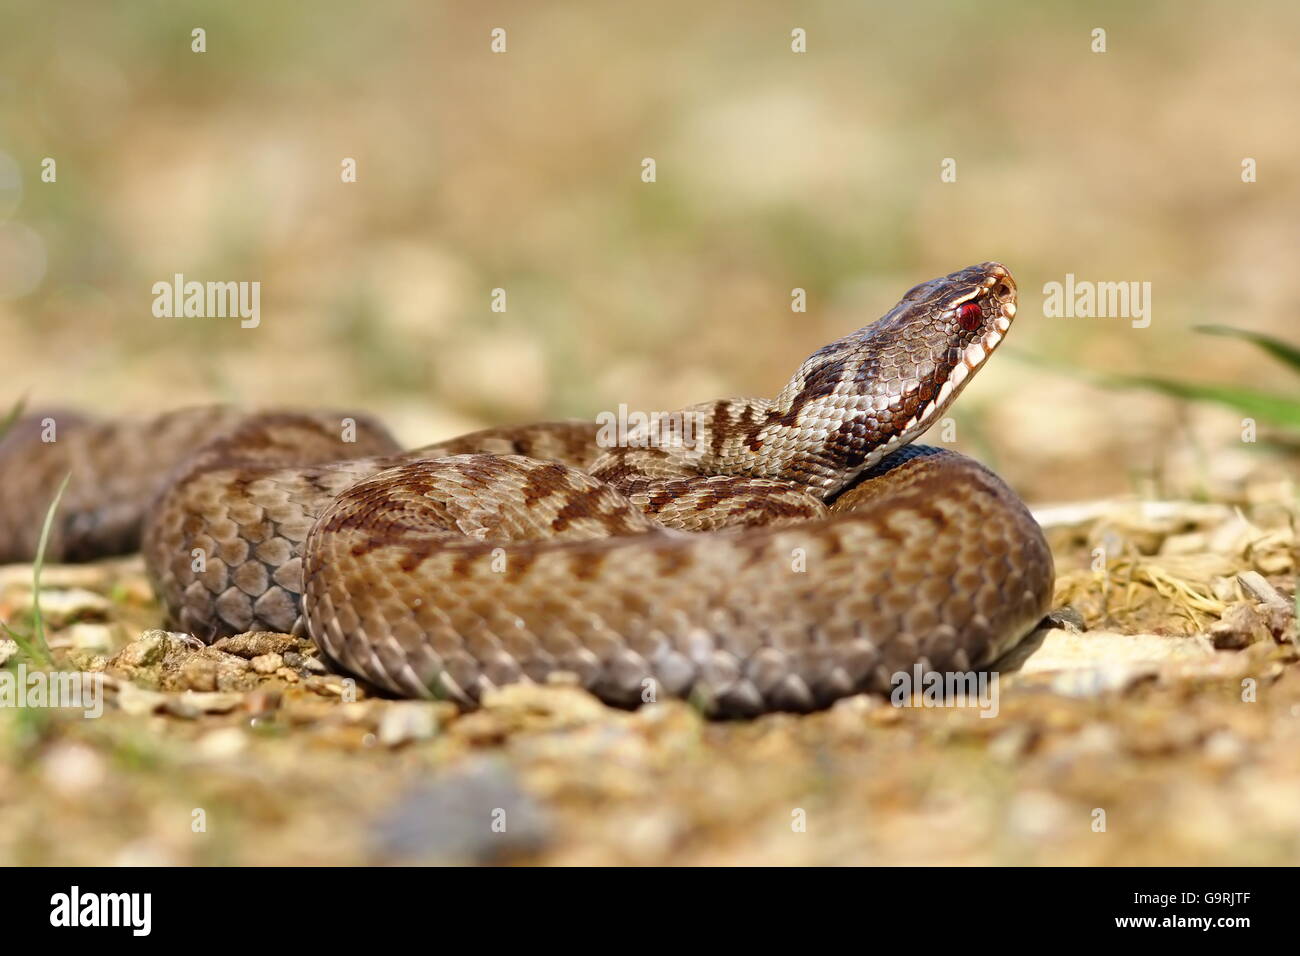 beautiful european venomous snake on the ground ( Vipera berus, the european common crossed adder, female ) Stock Photo